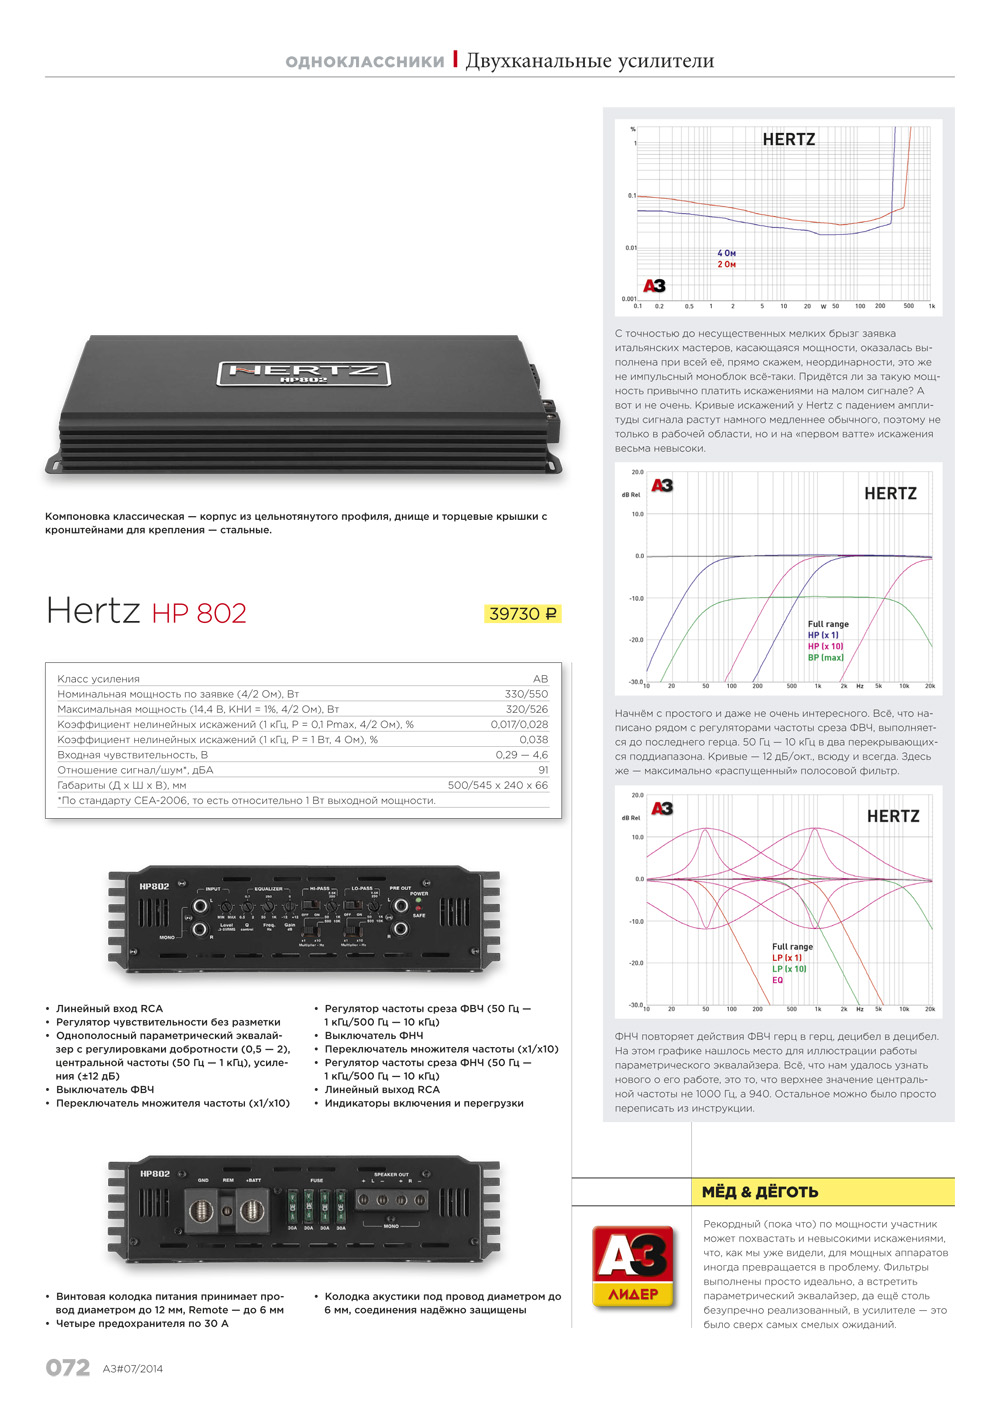 Hertz HP 802 в журнале "АвтоЗвук"